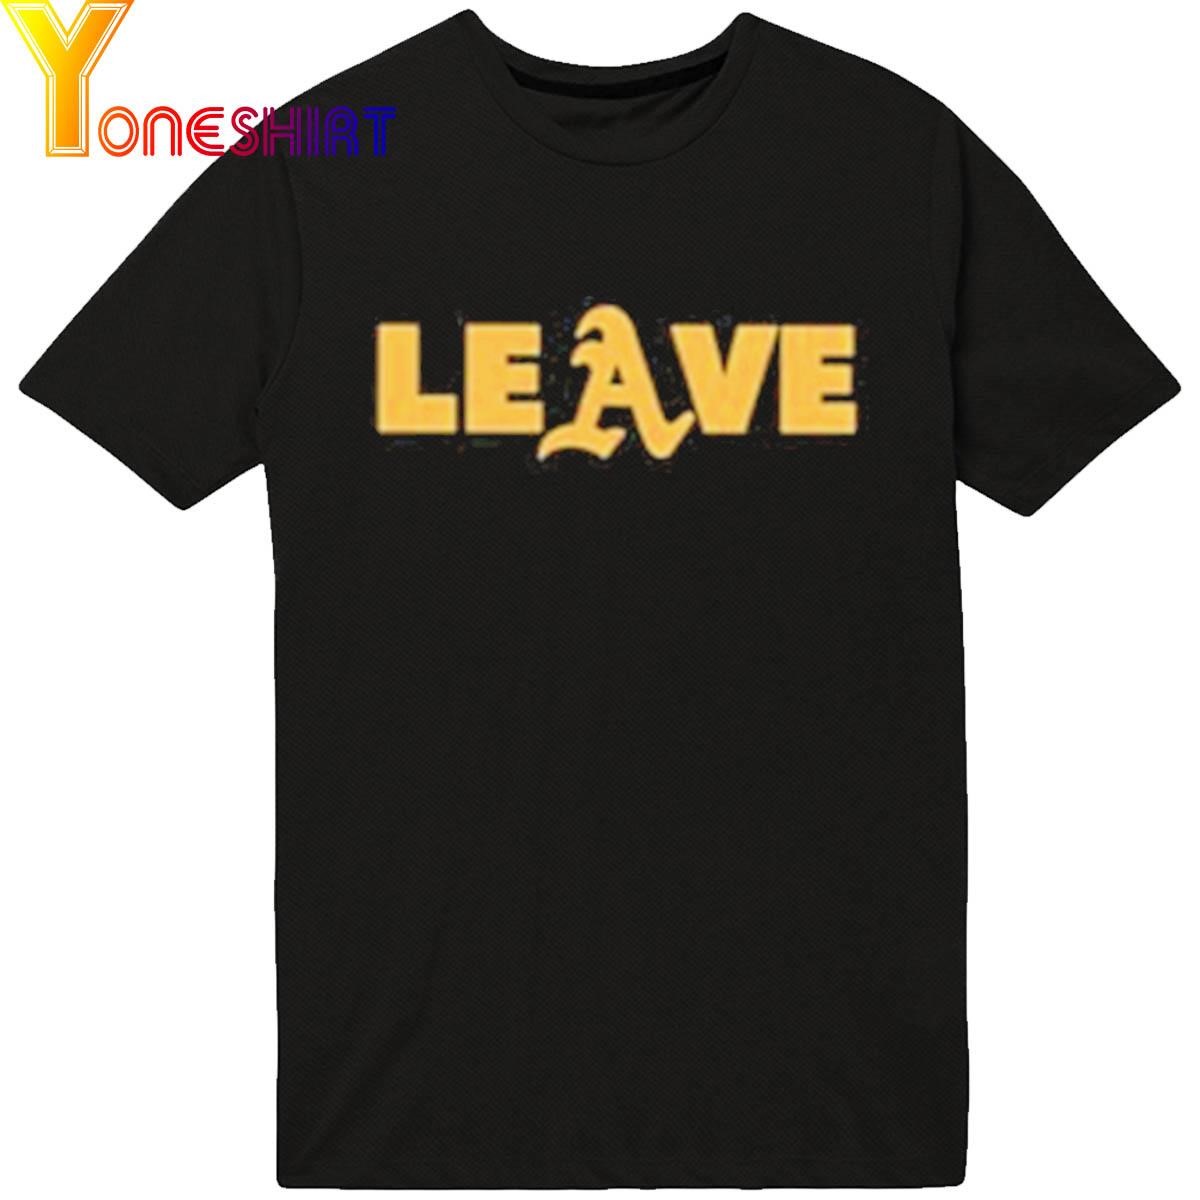 Oakland Leave T-Shirt